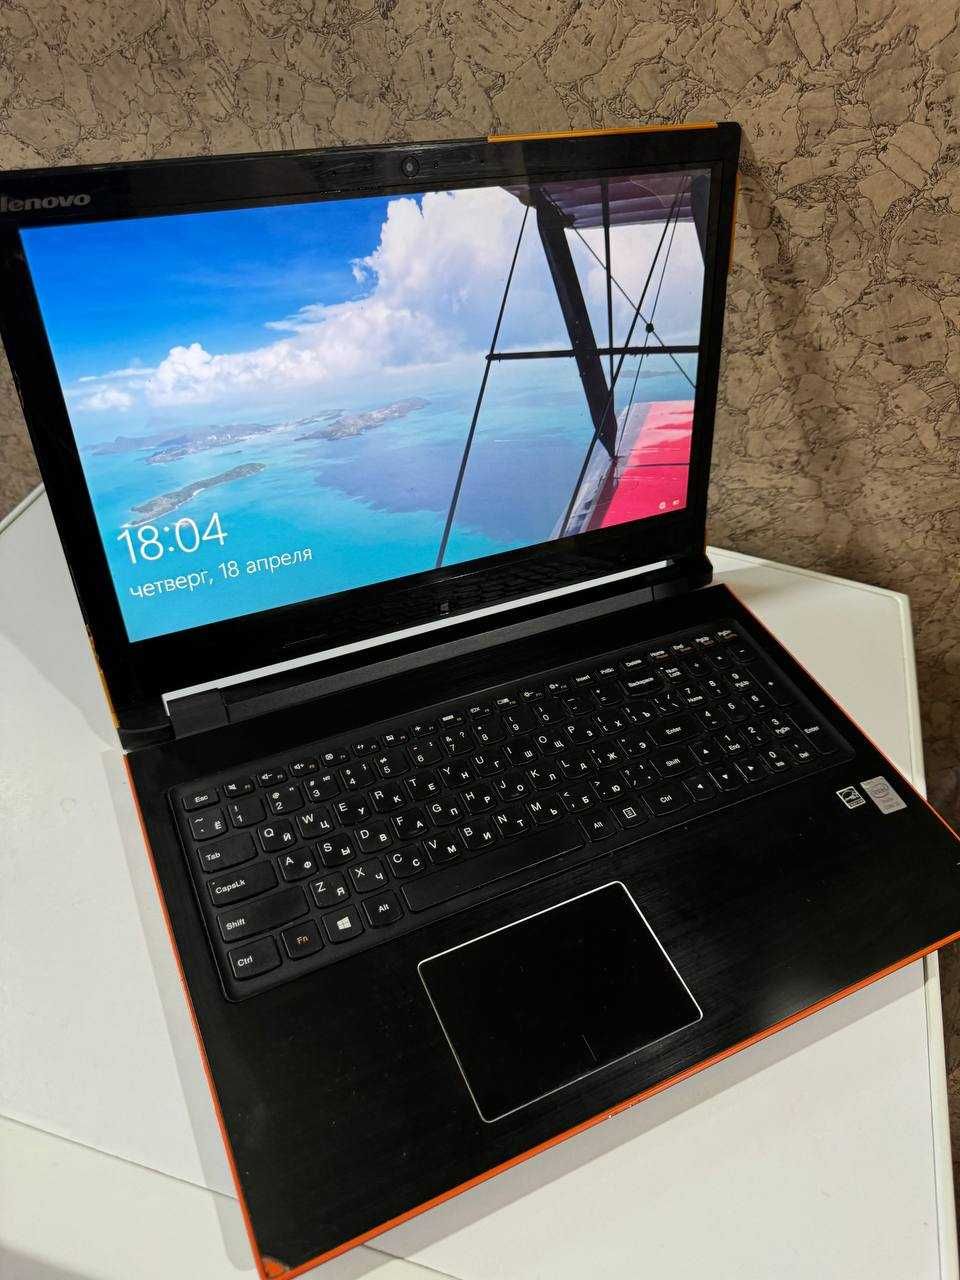 Ноутбук Lenovo Ideapad i5-4200u, Geforce 720m 2GB, 8/265 gb ssd